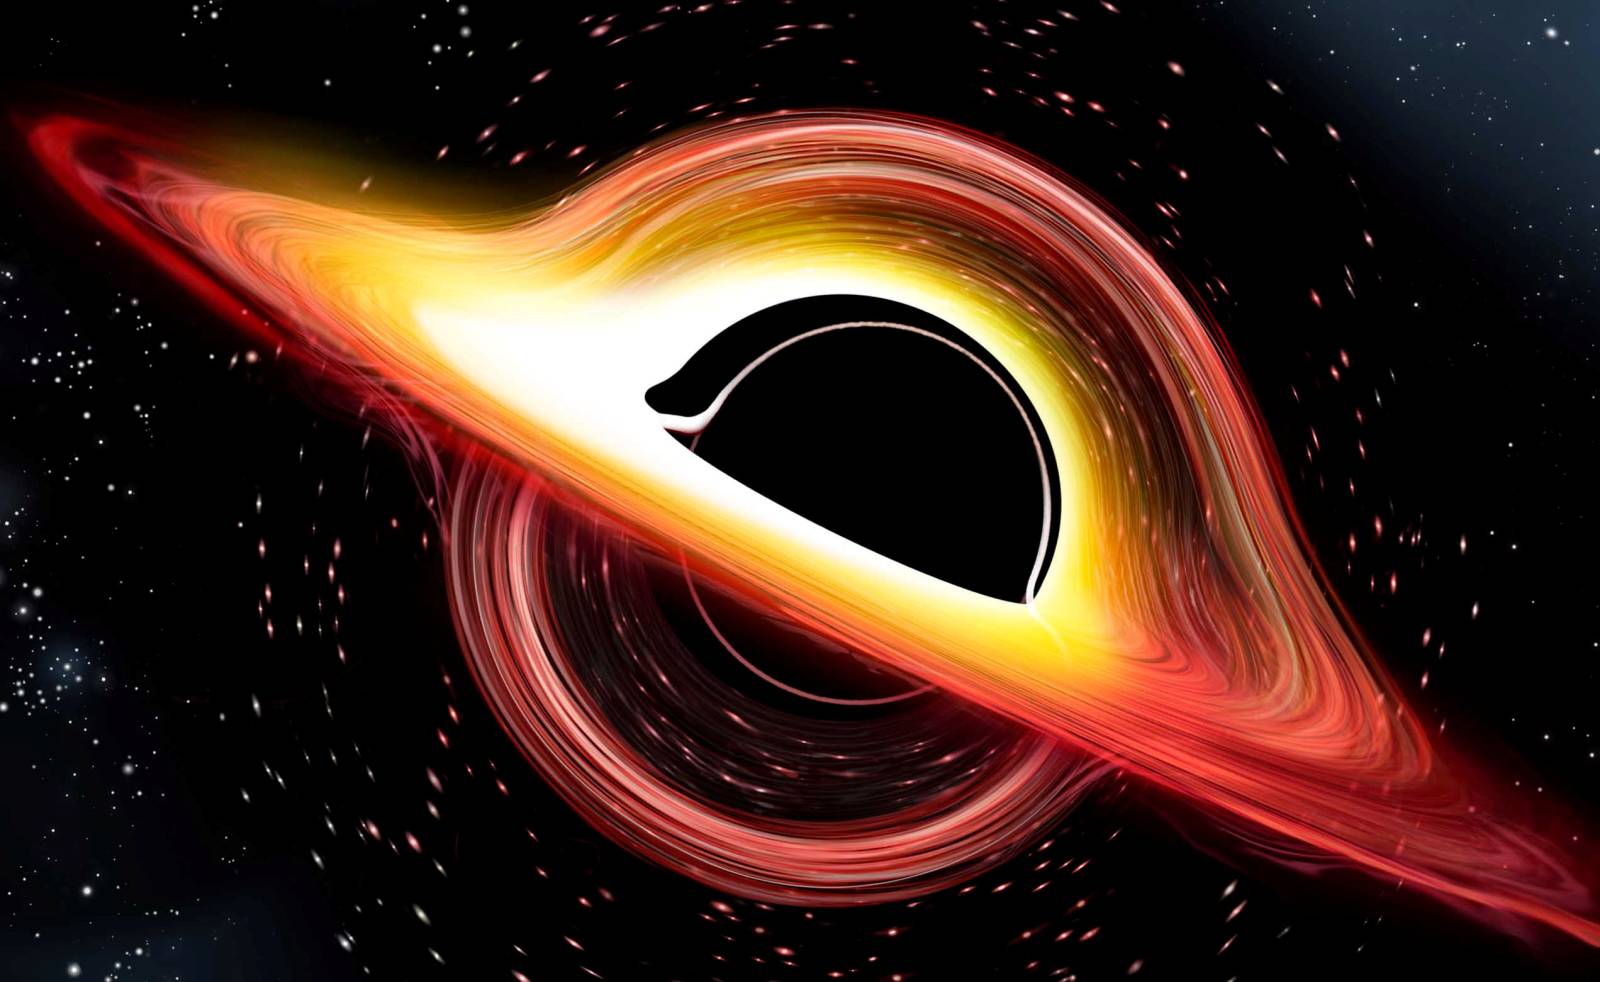 Black hole pulsations